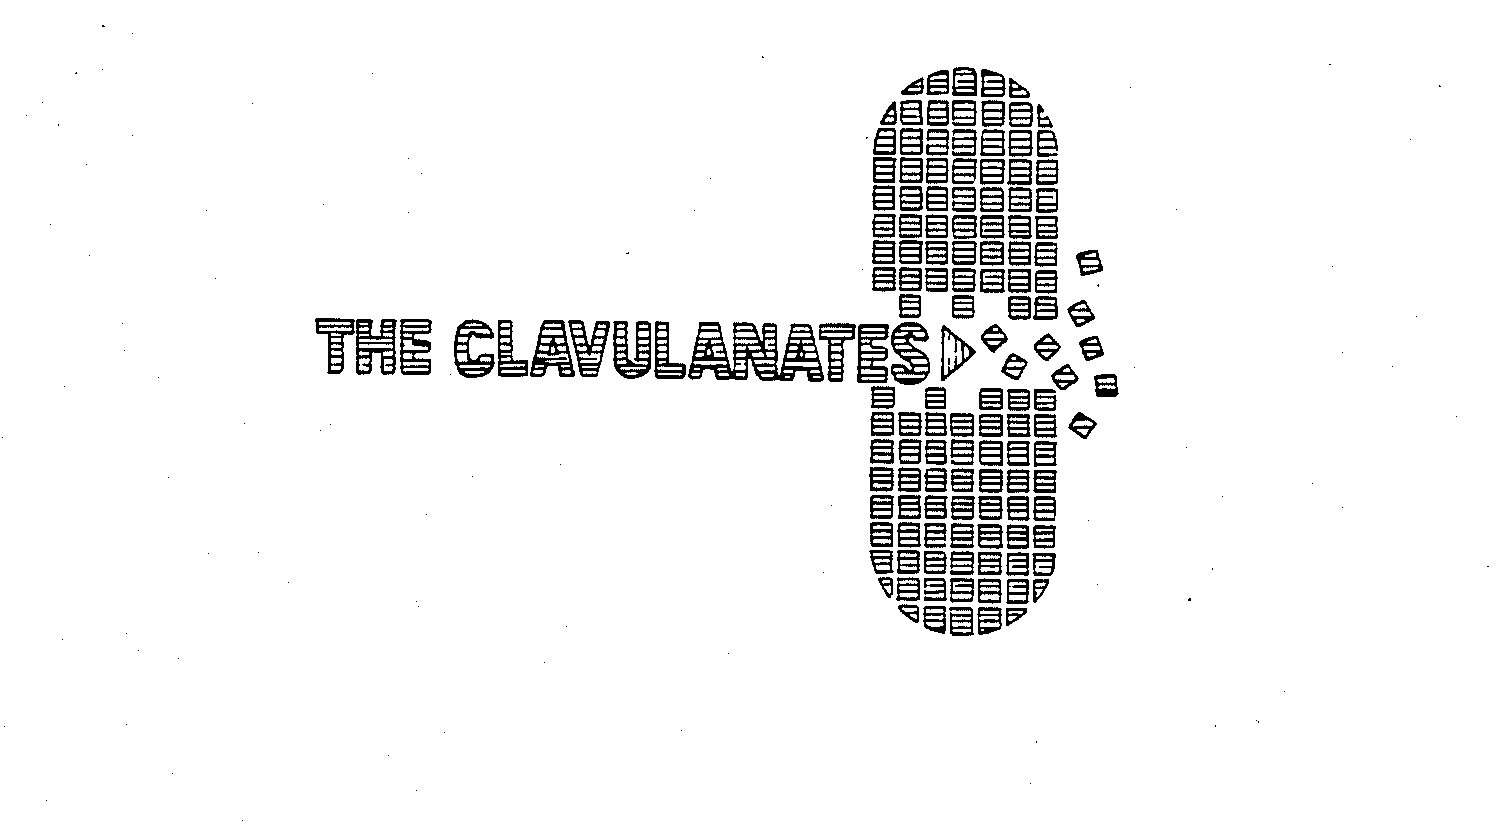  THE CLAVULANATES